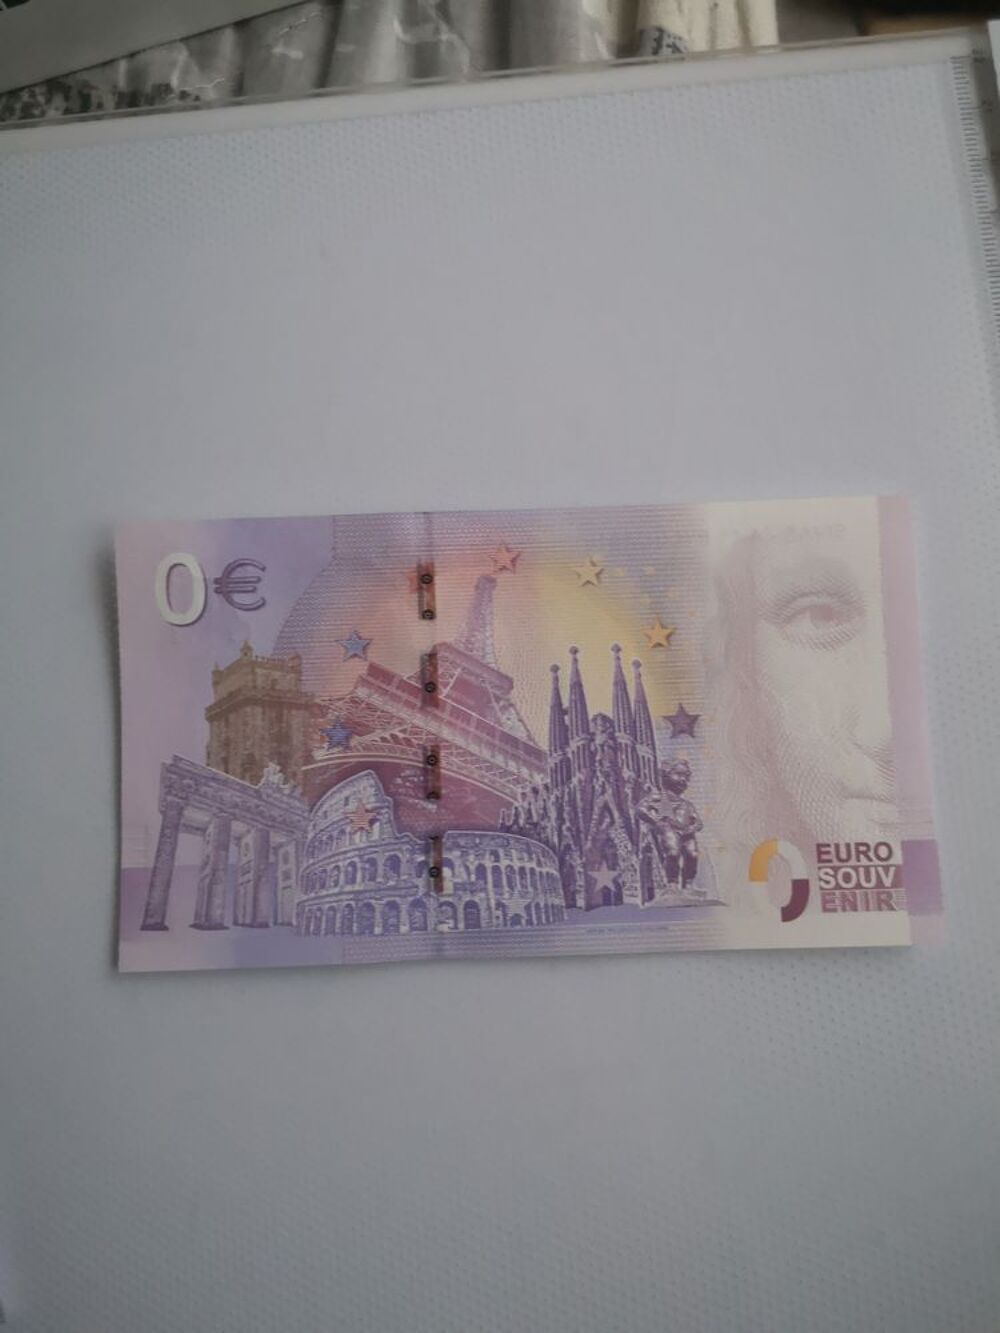 billets euro souvenir 